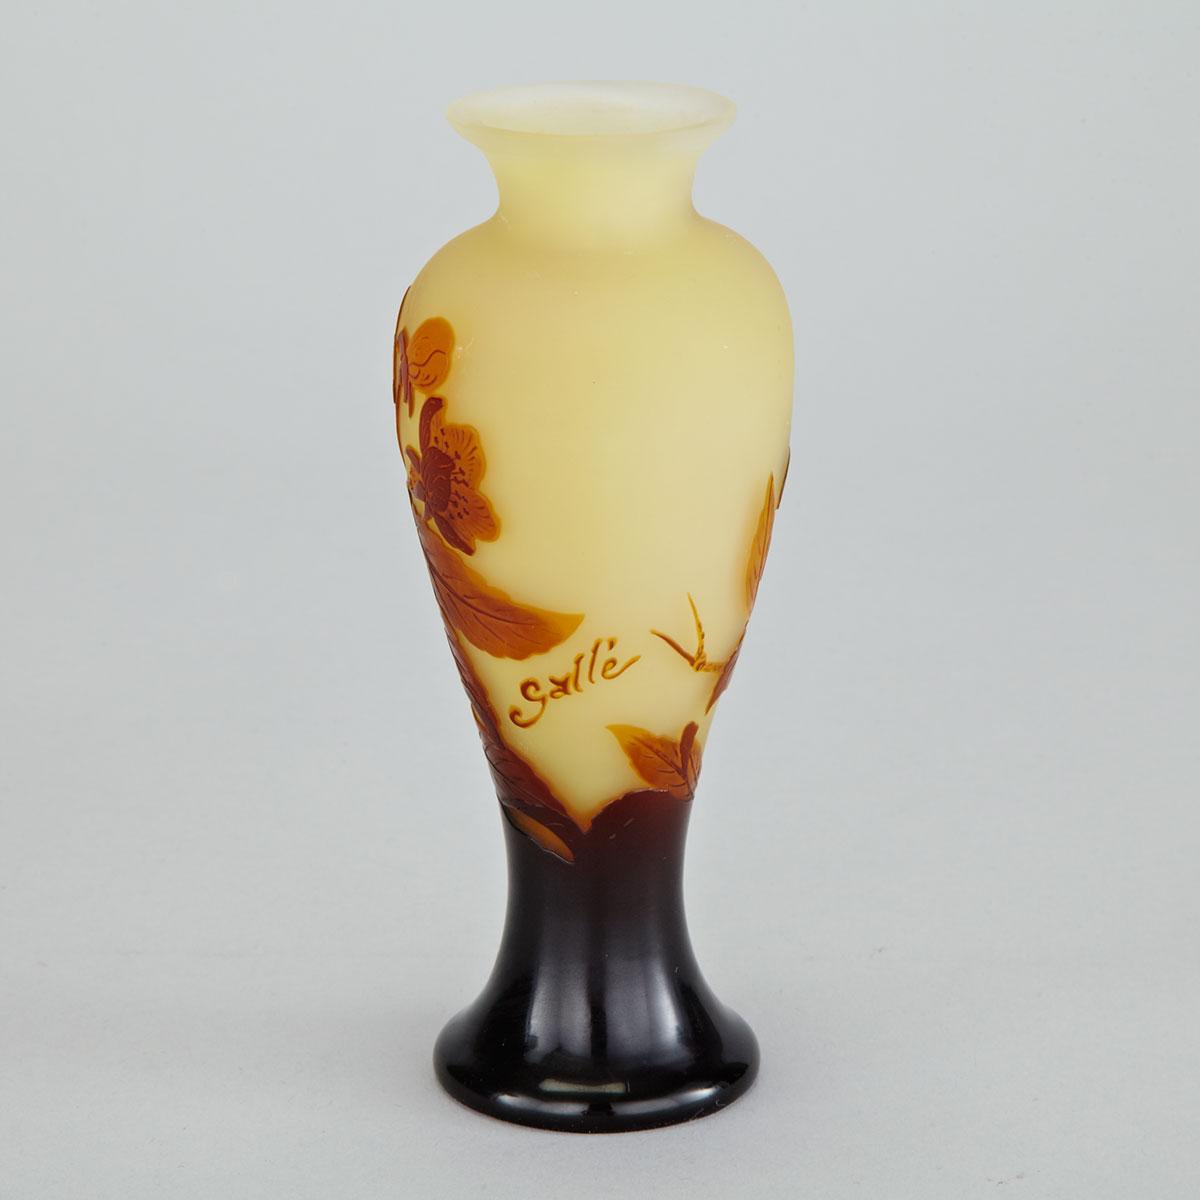 Gallé Cameo Glass Hydrangea Vase, c.1900